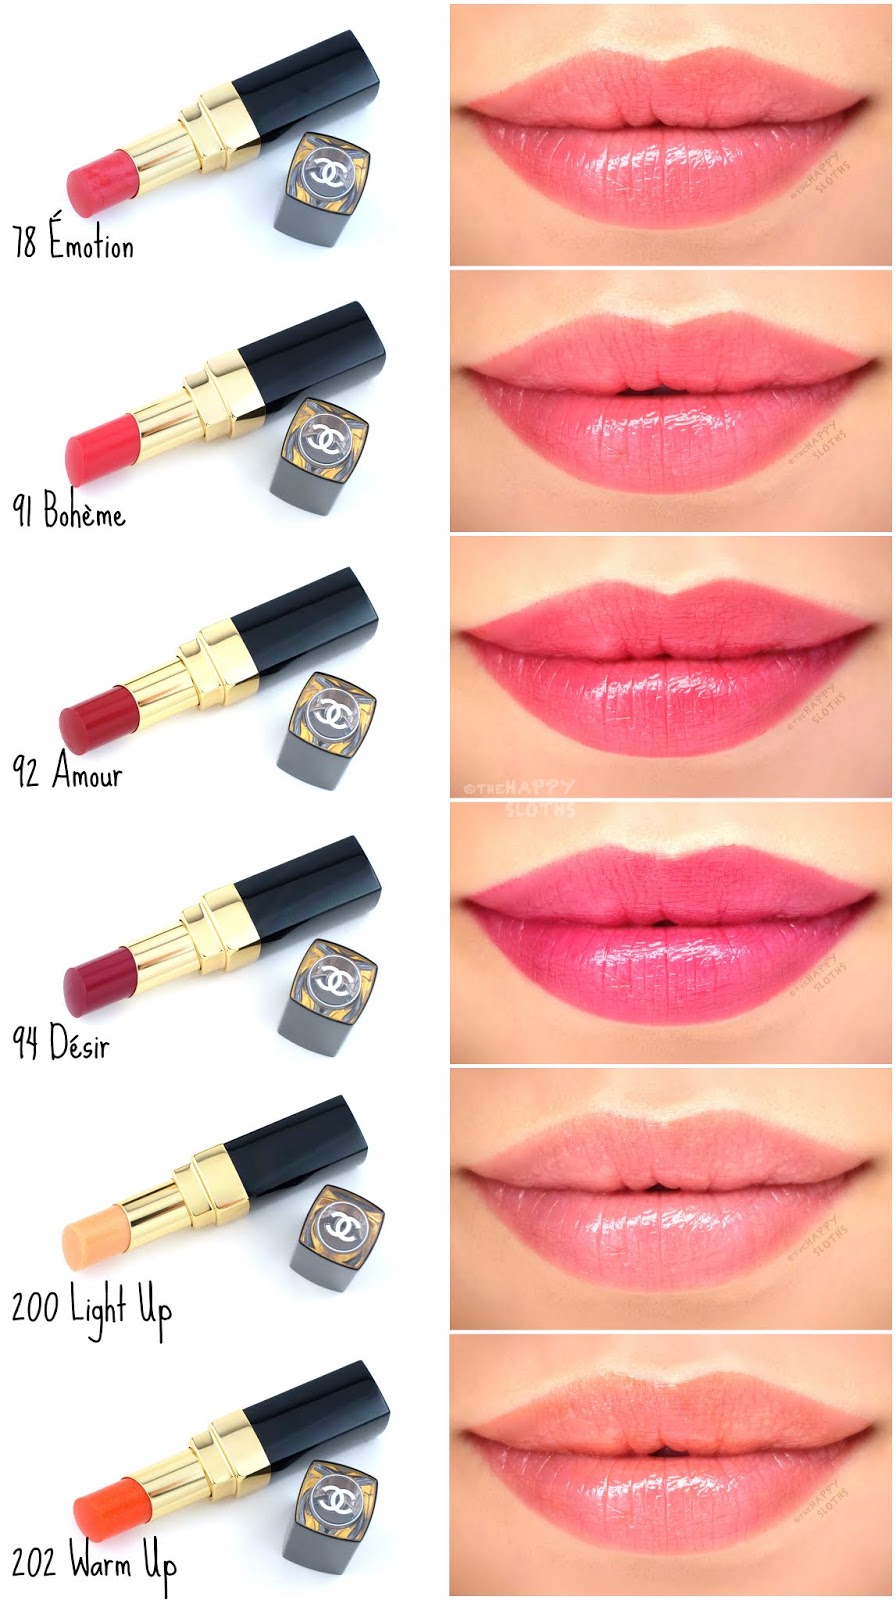 chanel lipstick purple